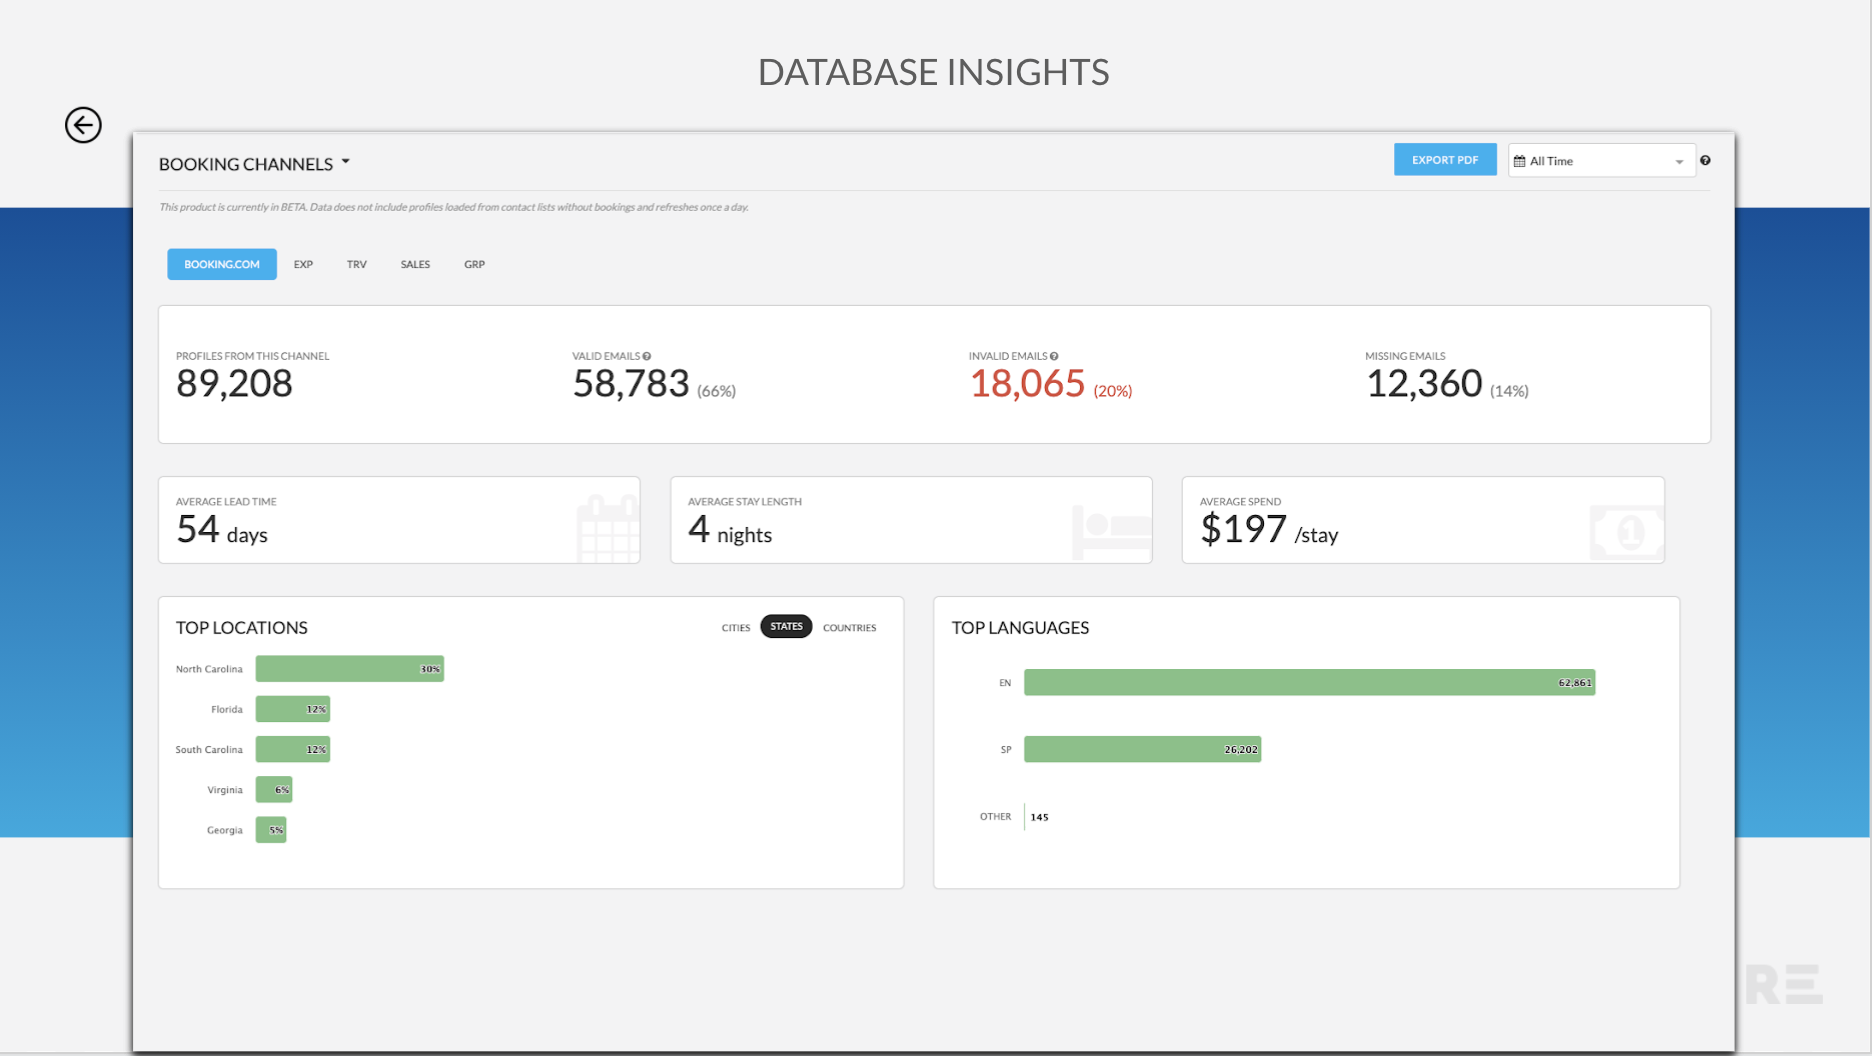 Database insights